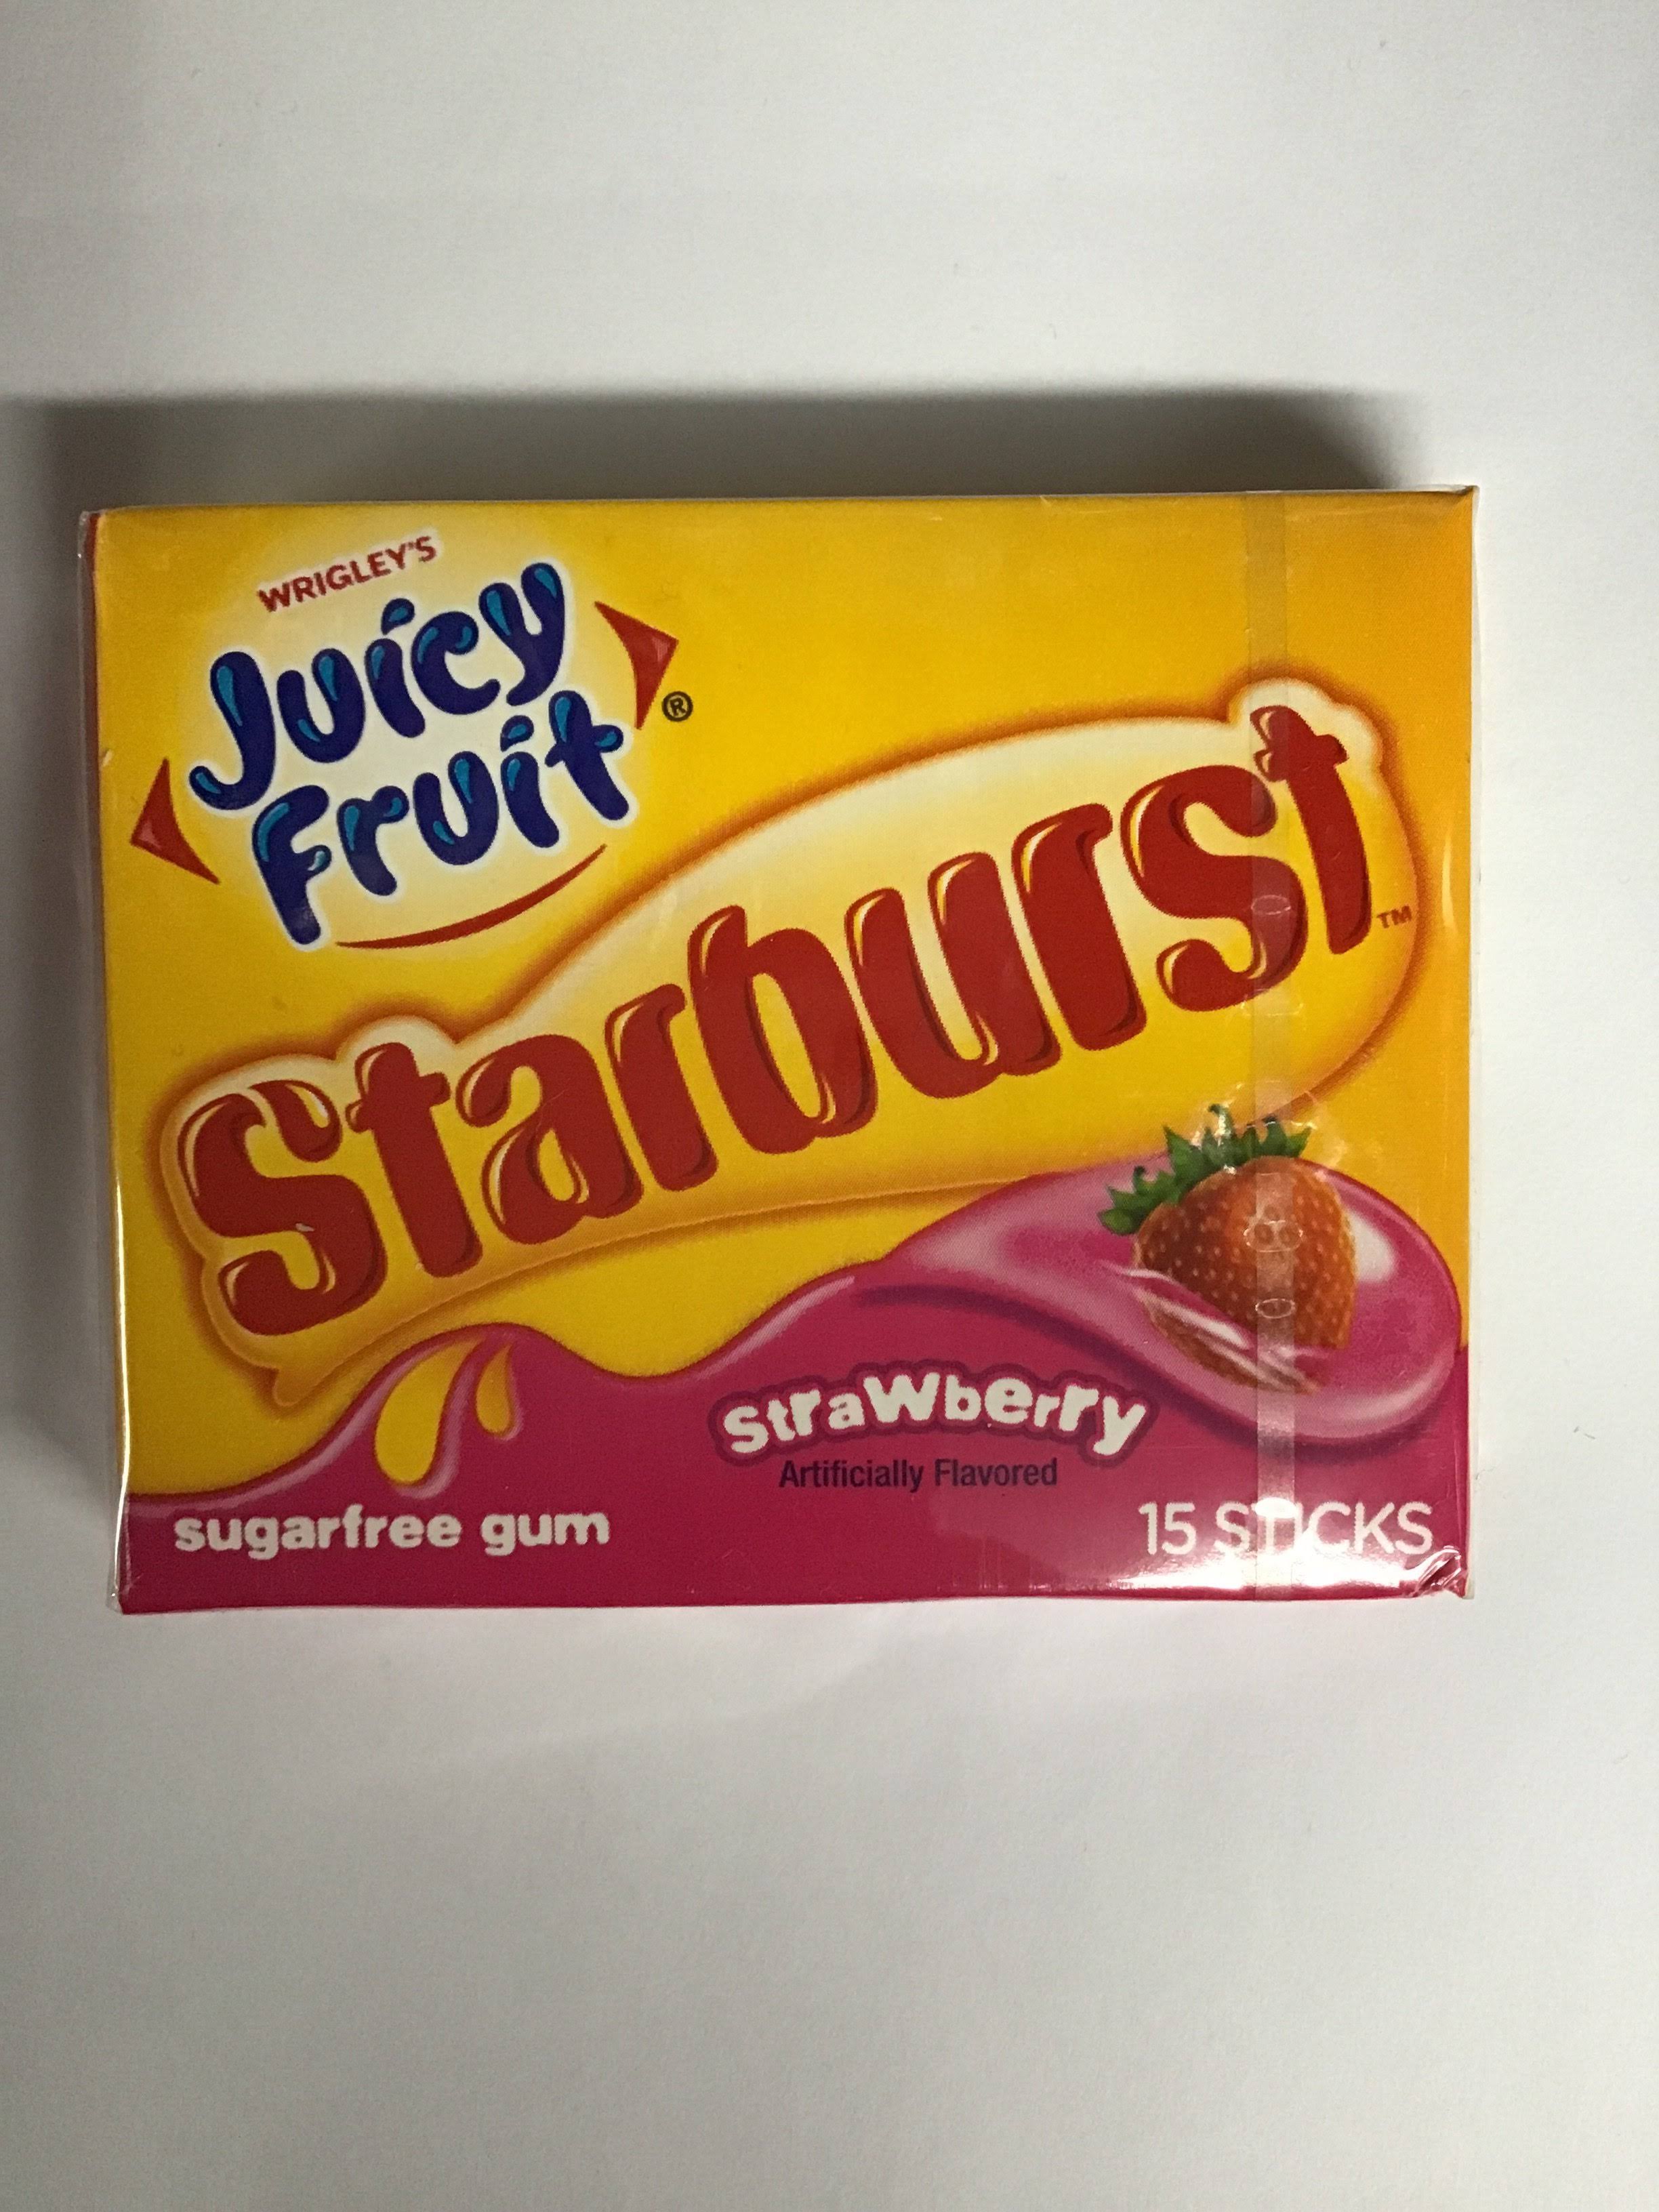 Juicy Fruit Starburst Strawberry Gum